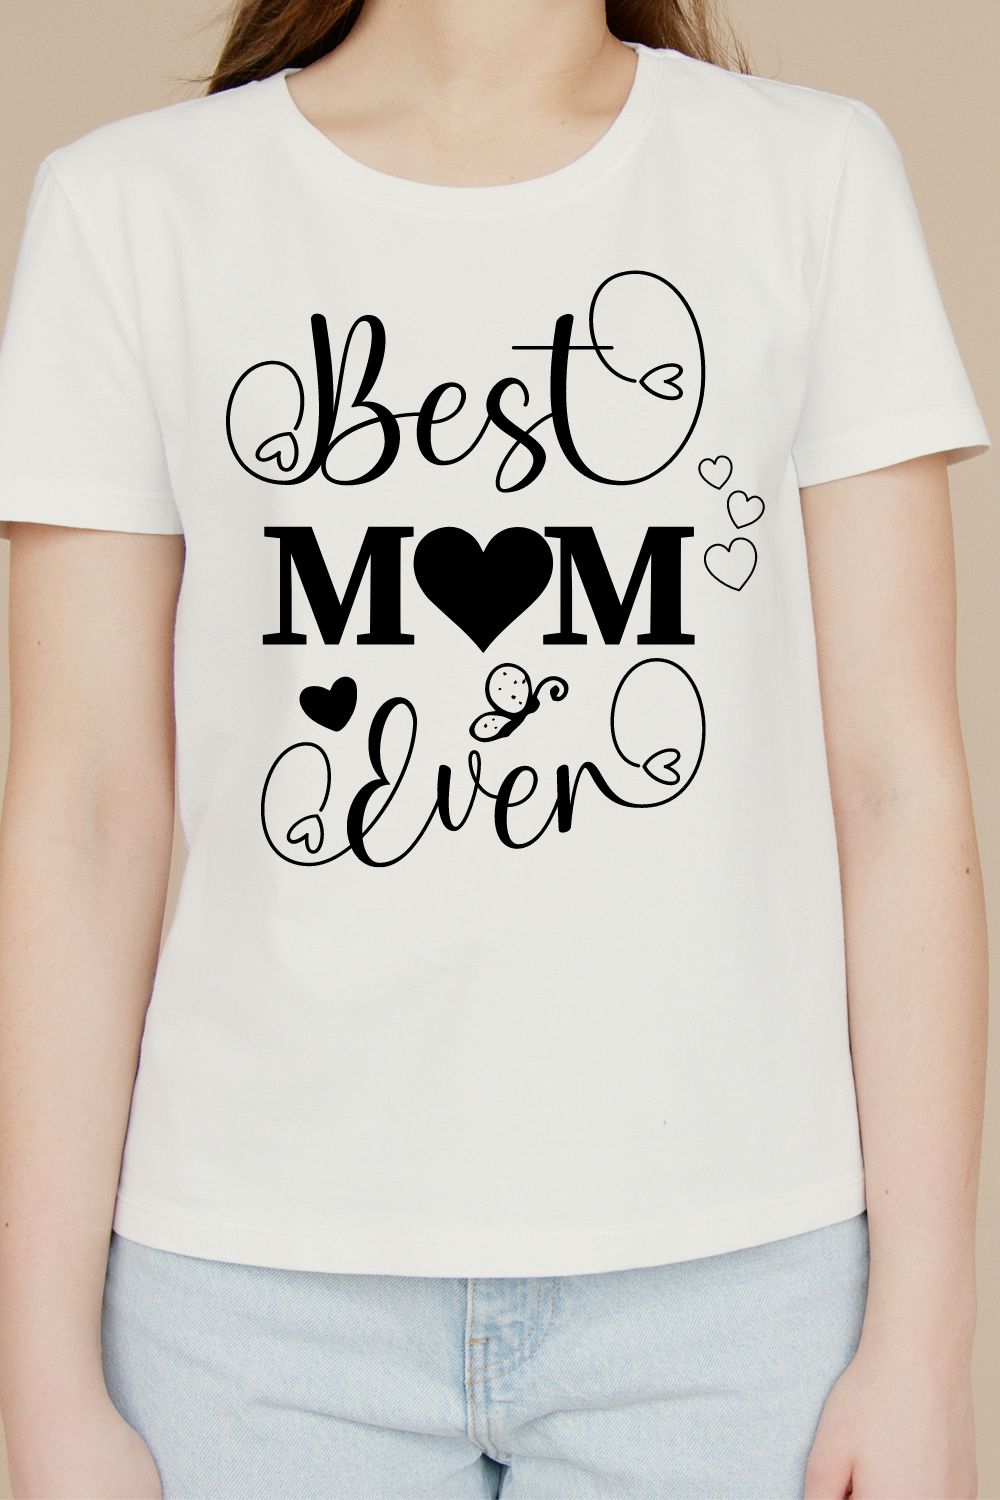 Best Mom Ever design pinterest preview image.